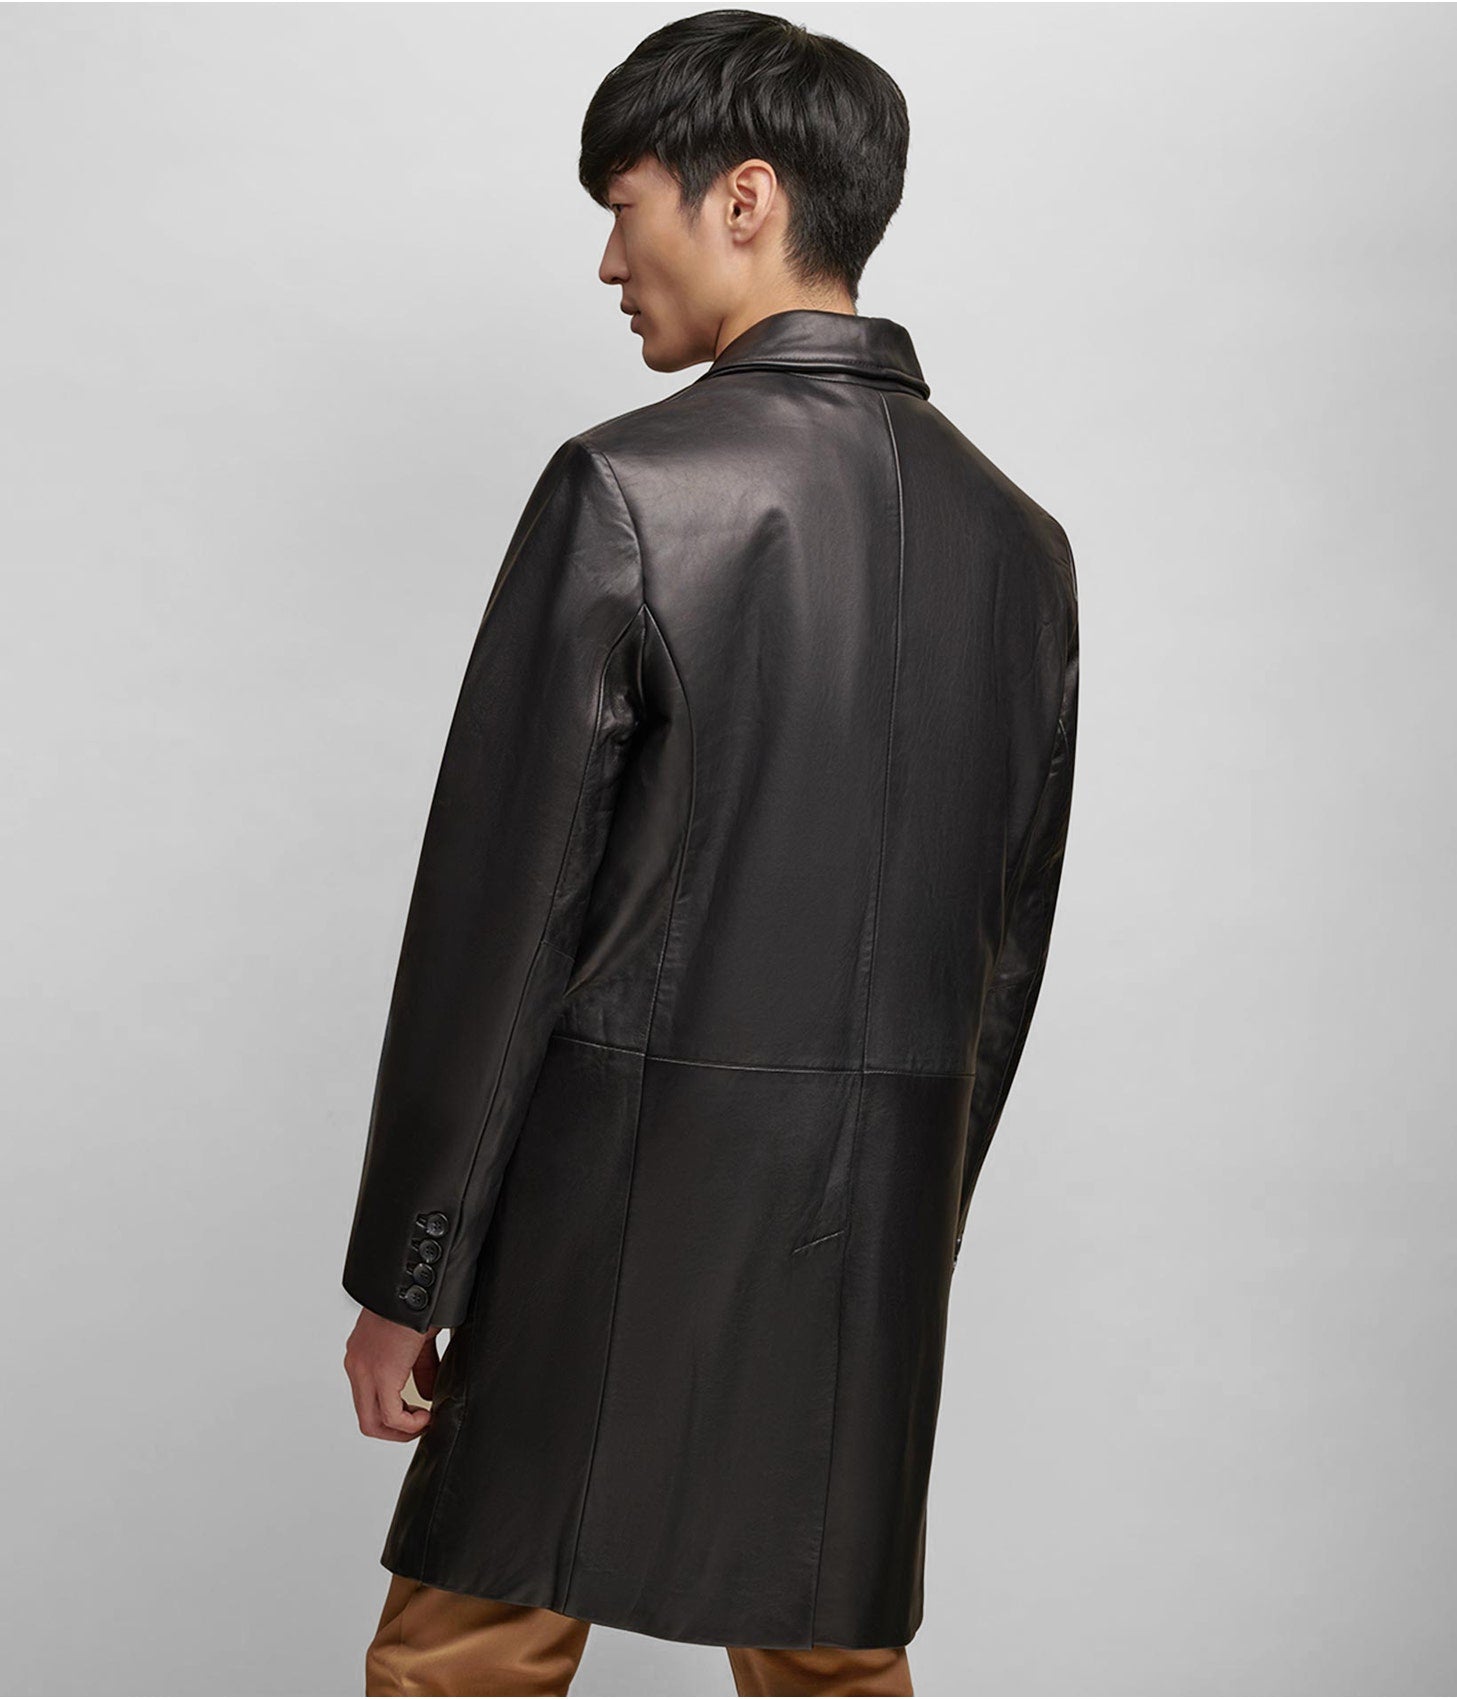 Men's Lined Leather Coat In Black